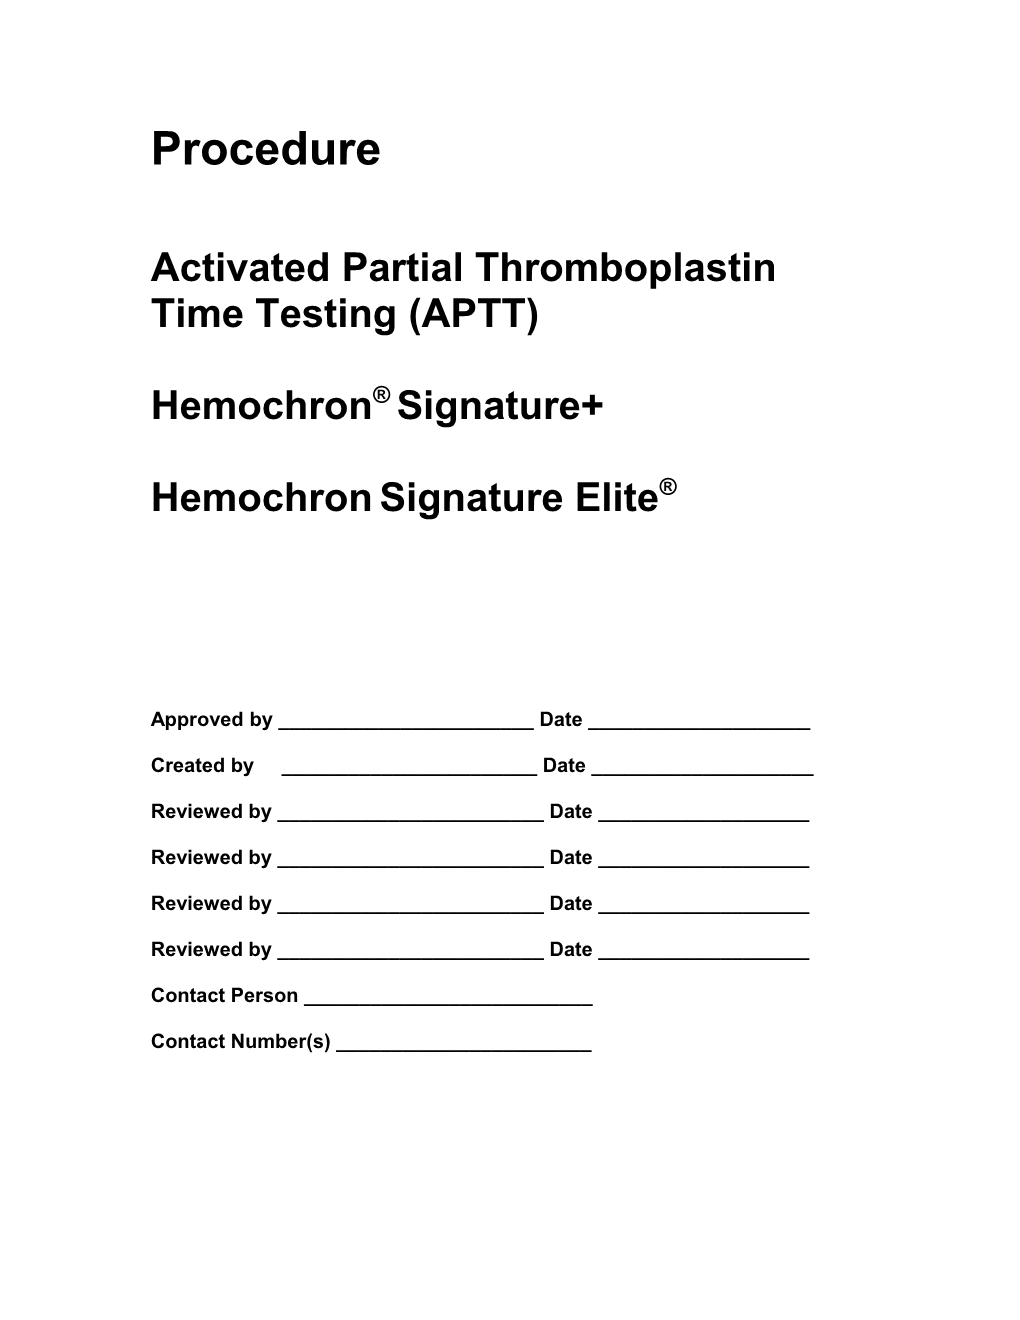 Activated Partial Thromboplastin Time Testing (APTT)